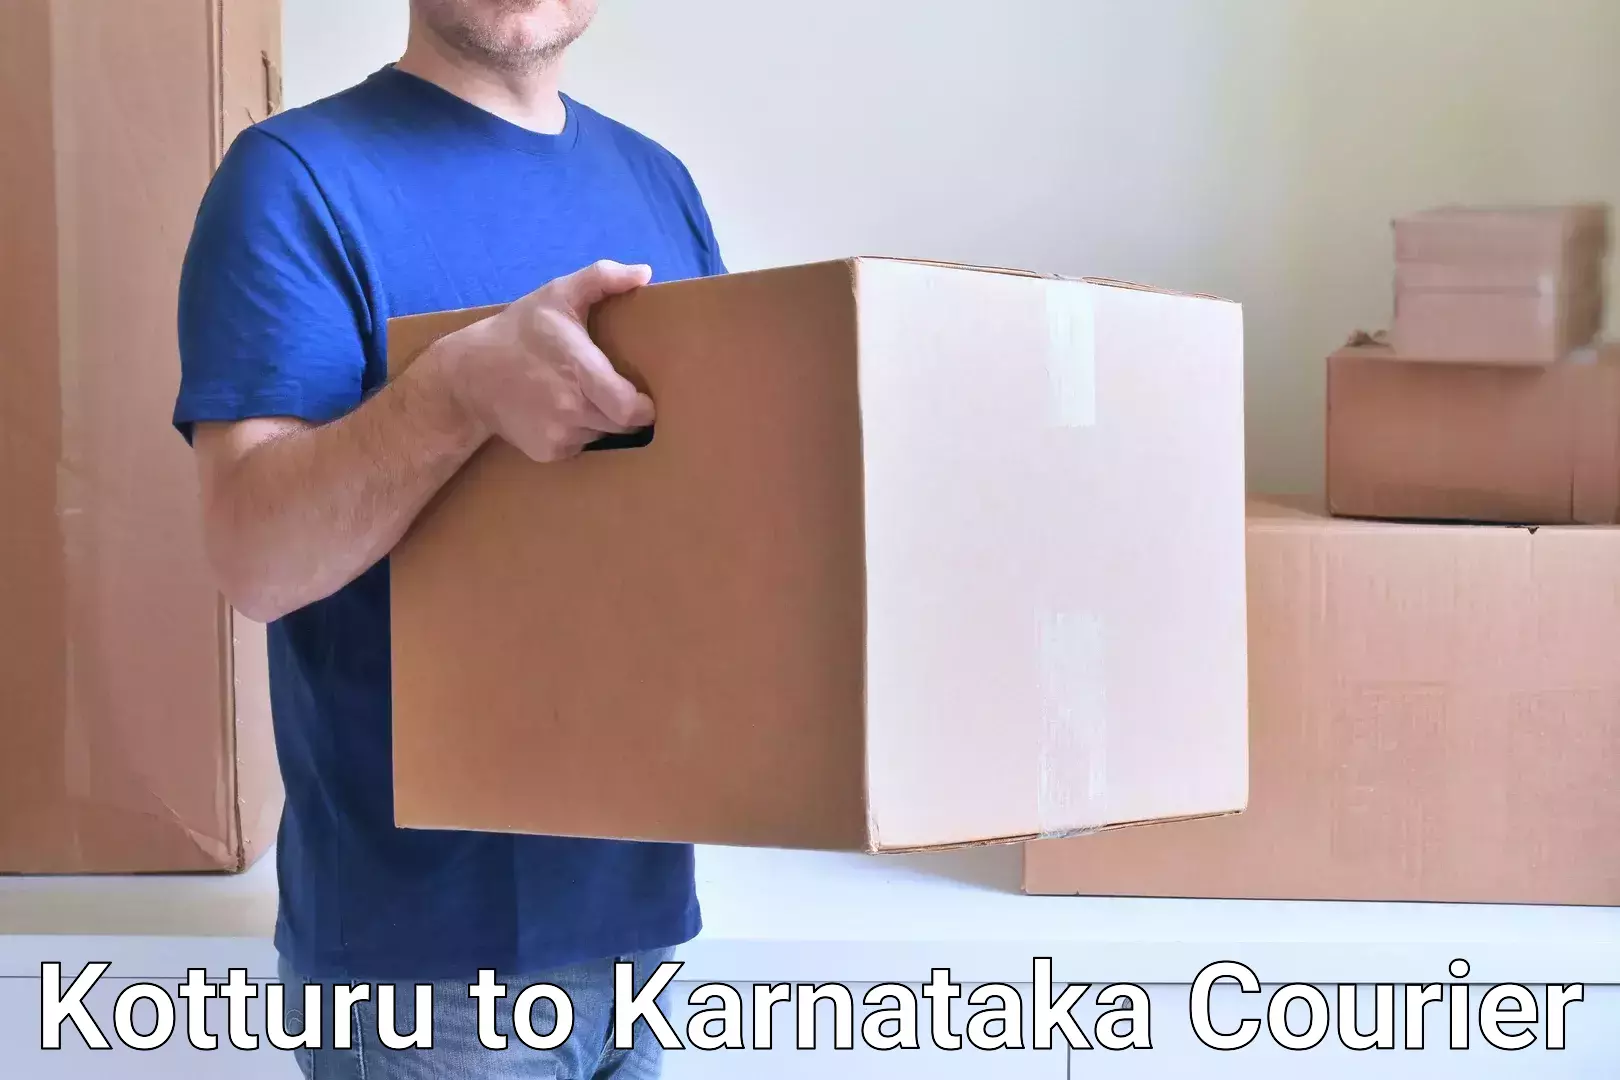 Quick booking process Kotturu to Karnataka